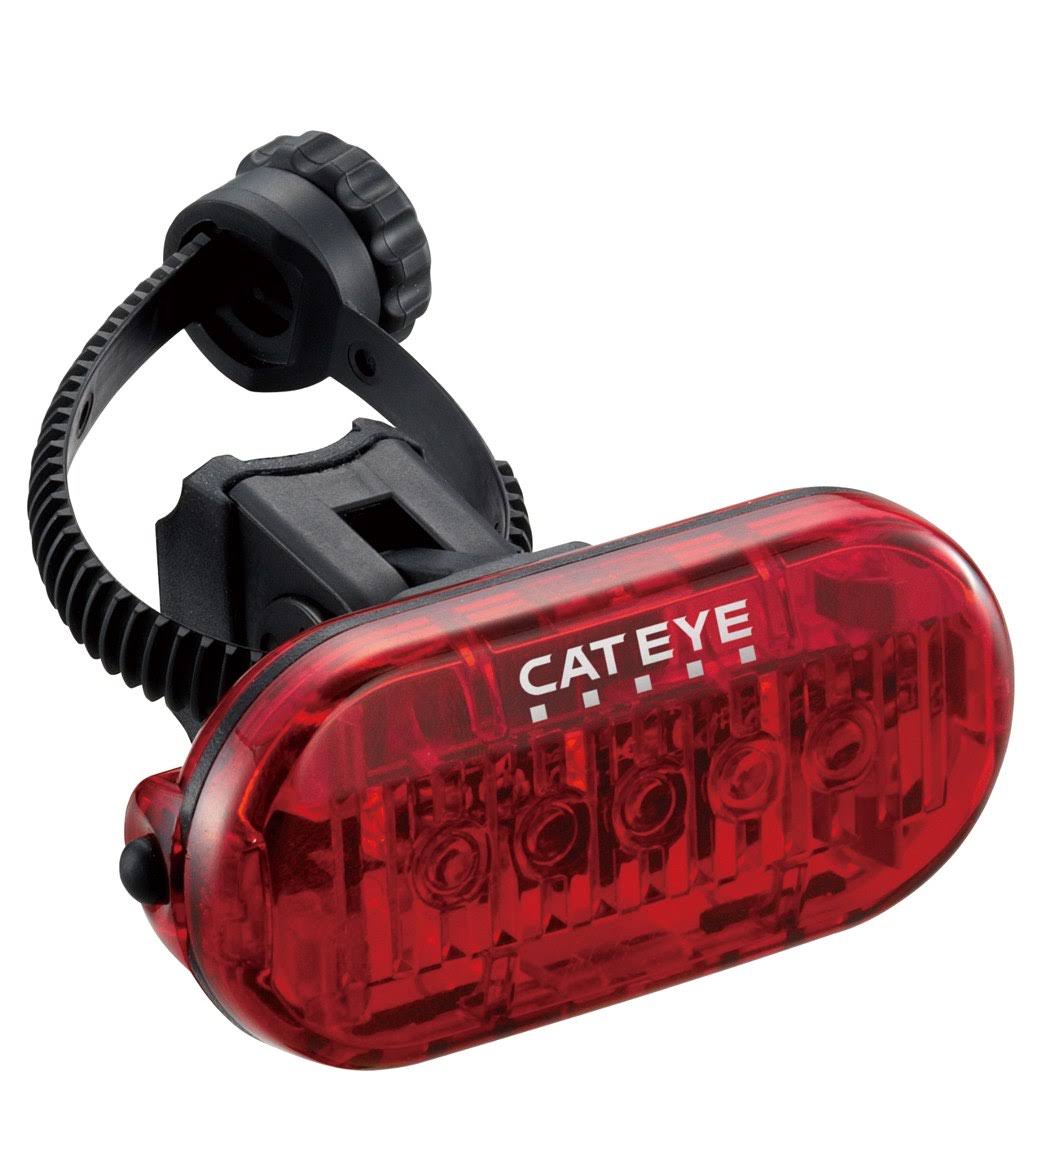 Cateye Omni 5 Bicycle Rear Safety Light